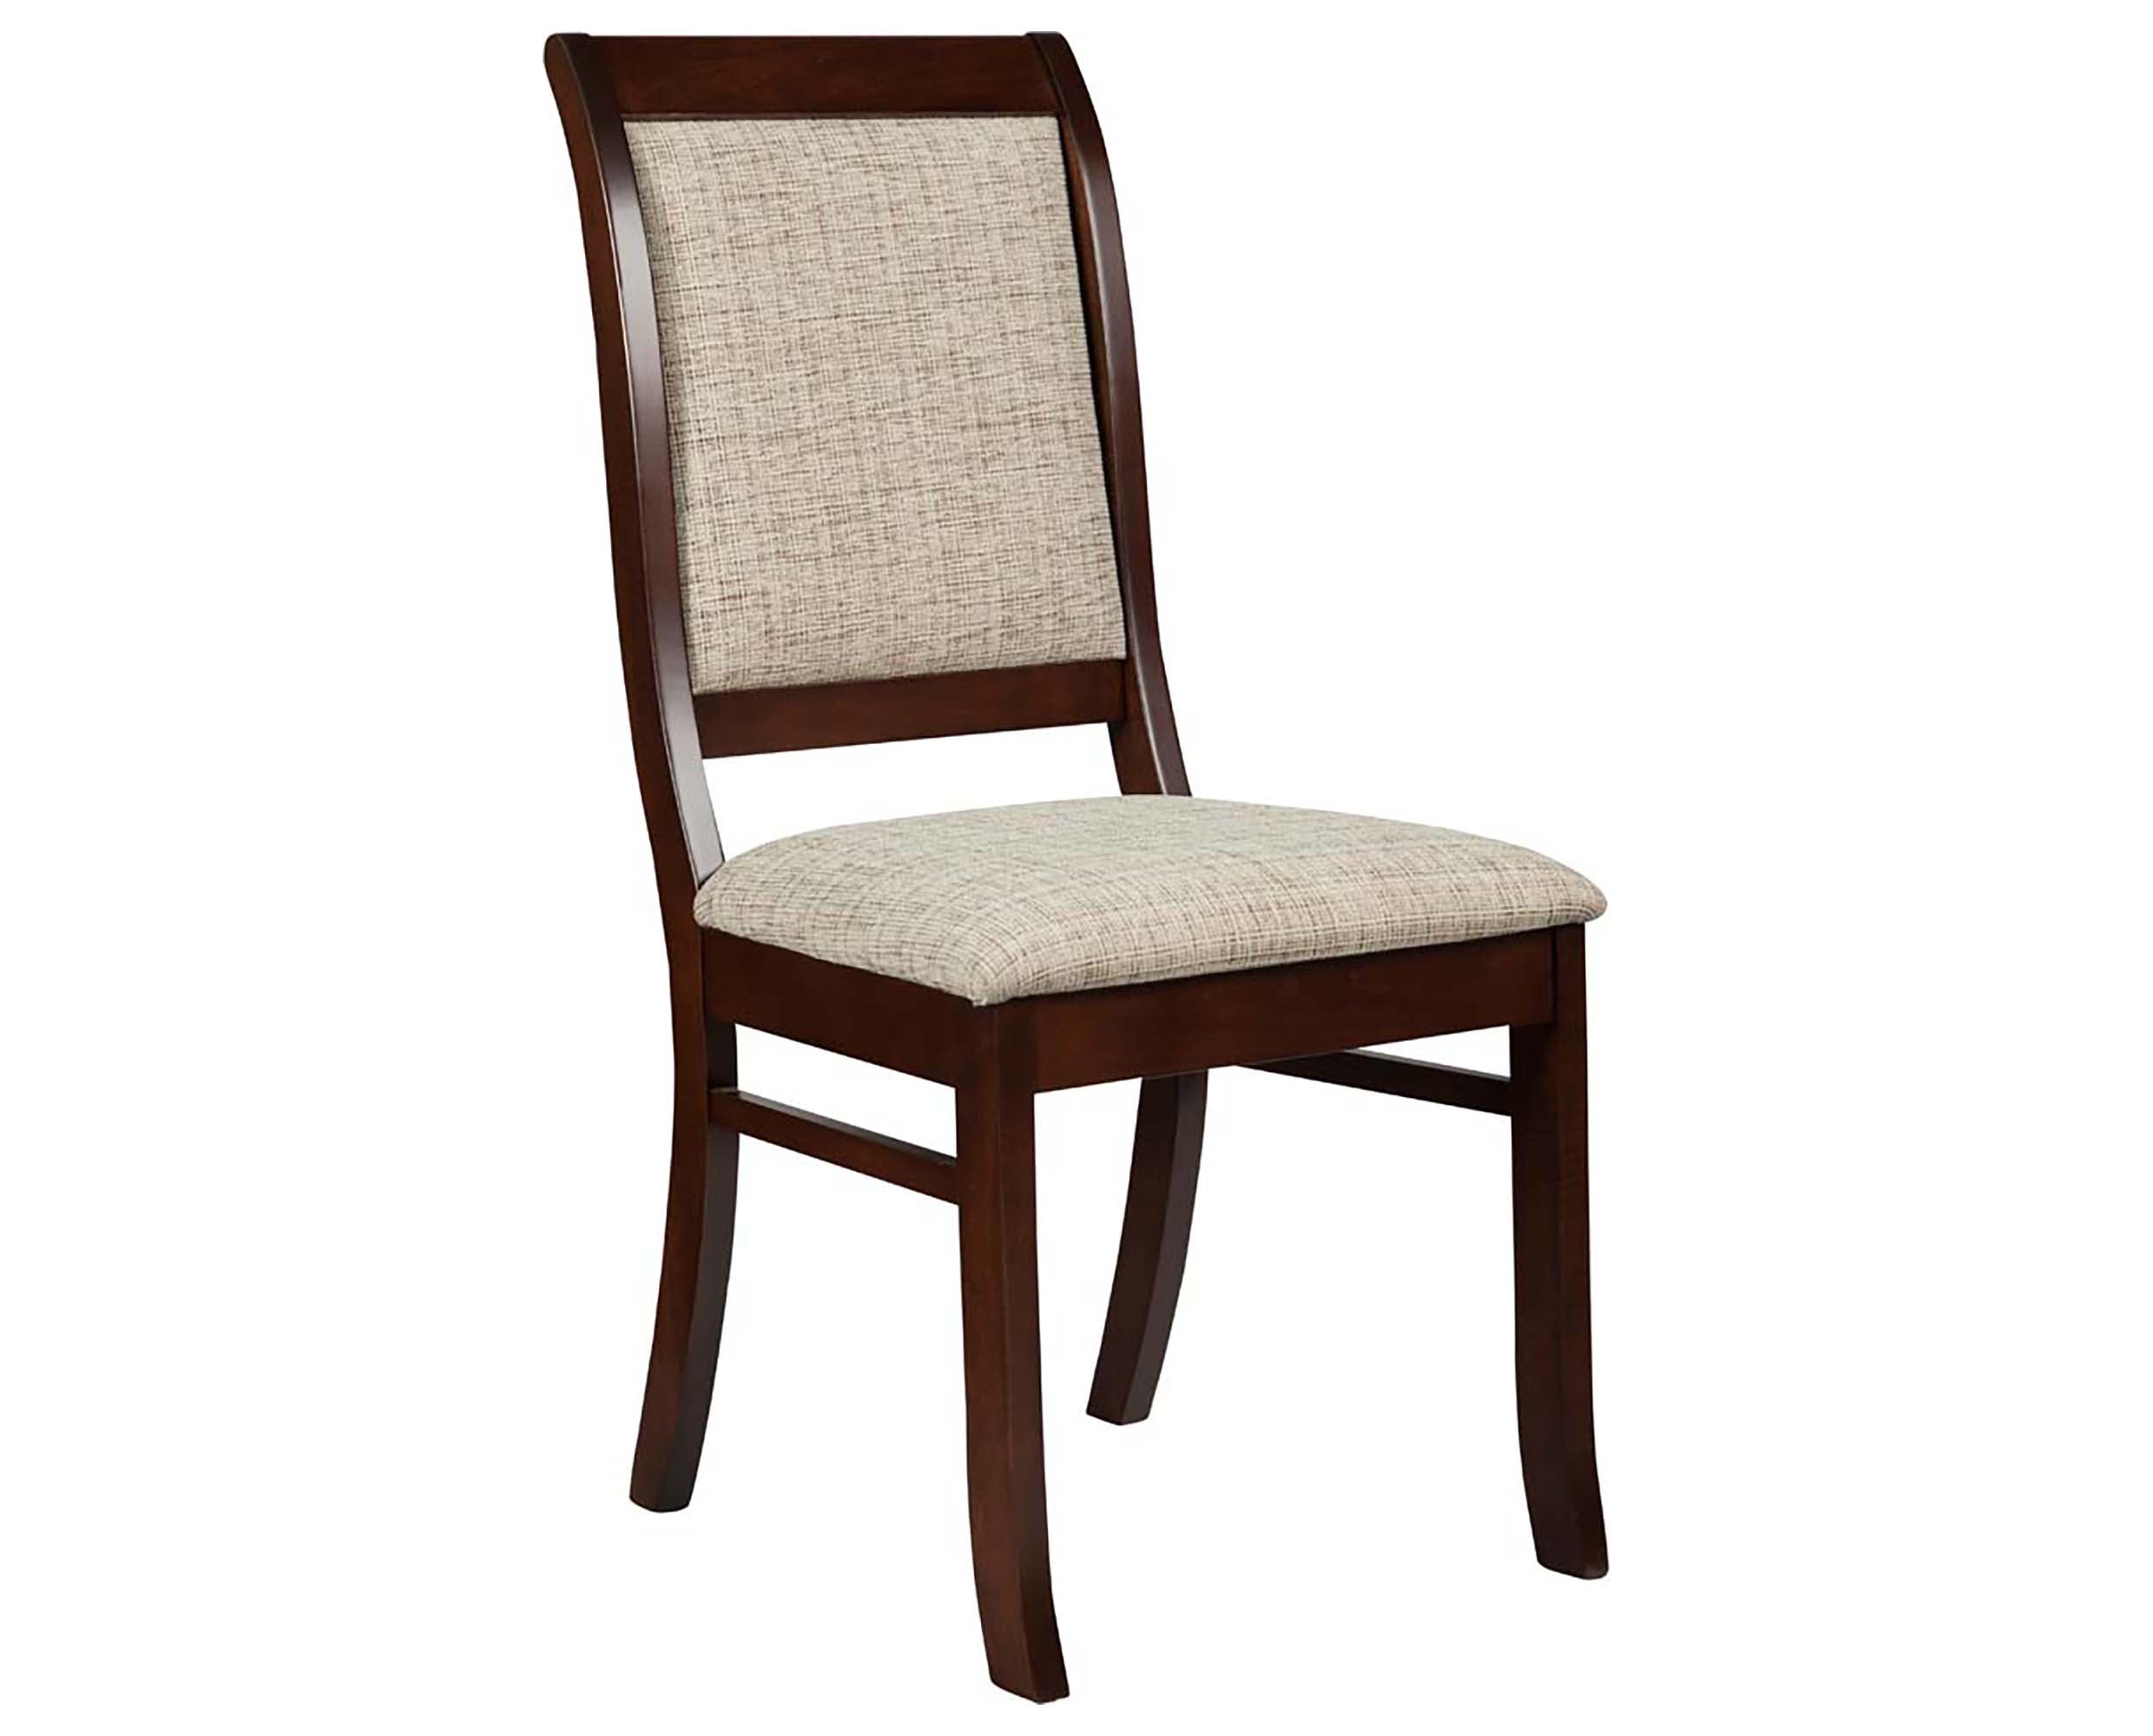 Chair as Shown | Cardinal Woodcraft Elizabeth Dining Chair | Valley Ridge Furniture